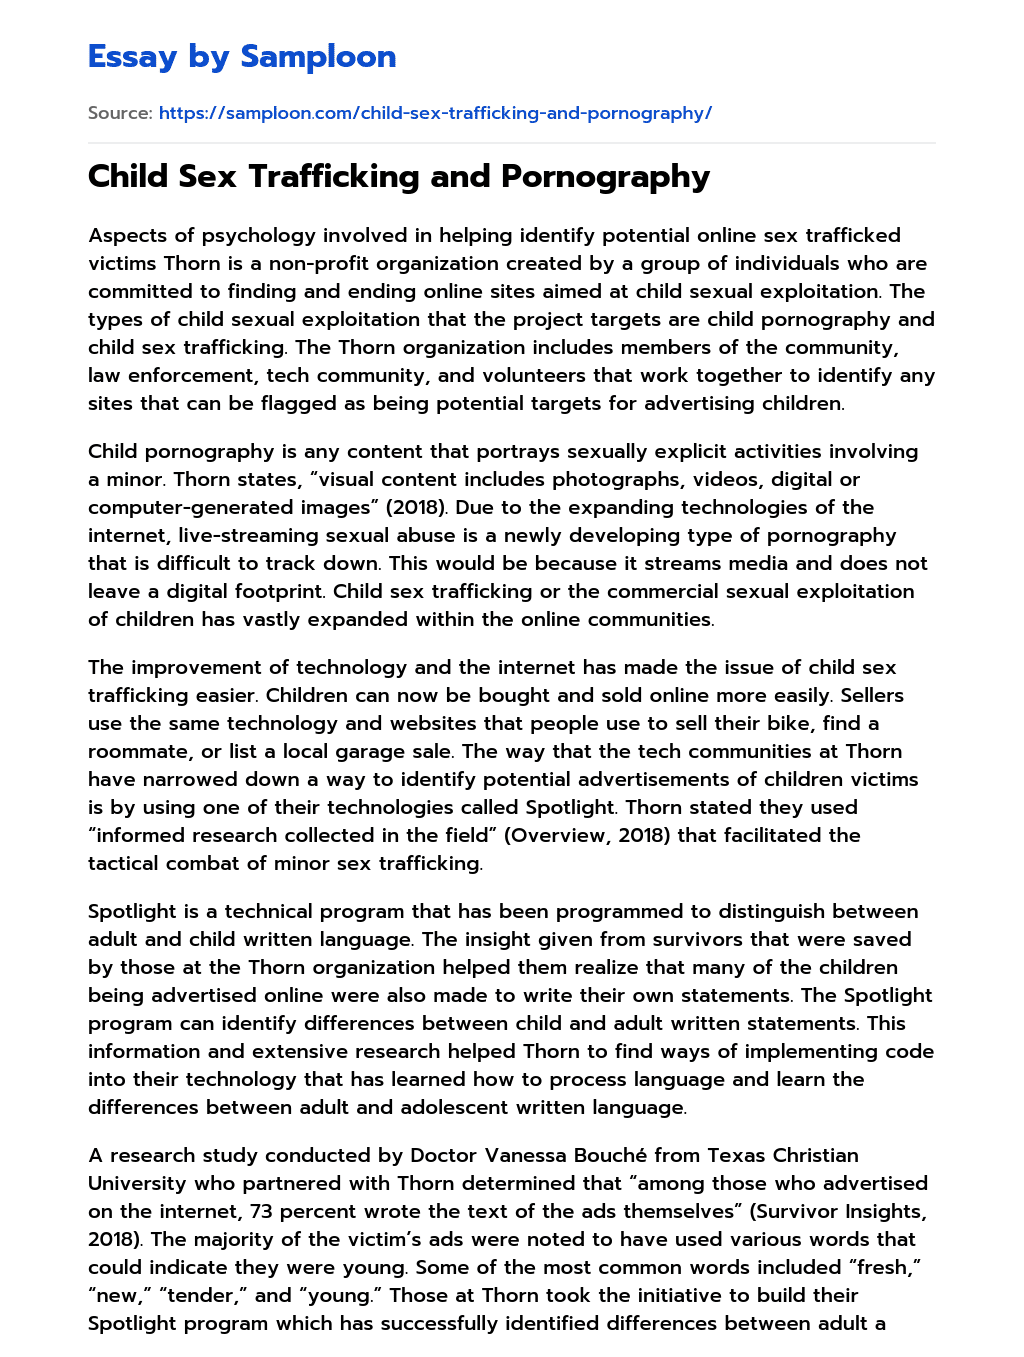 Child Sex Trafficking and Pornography essay